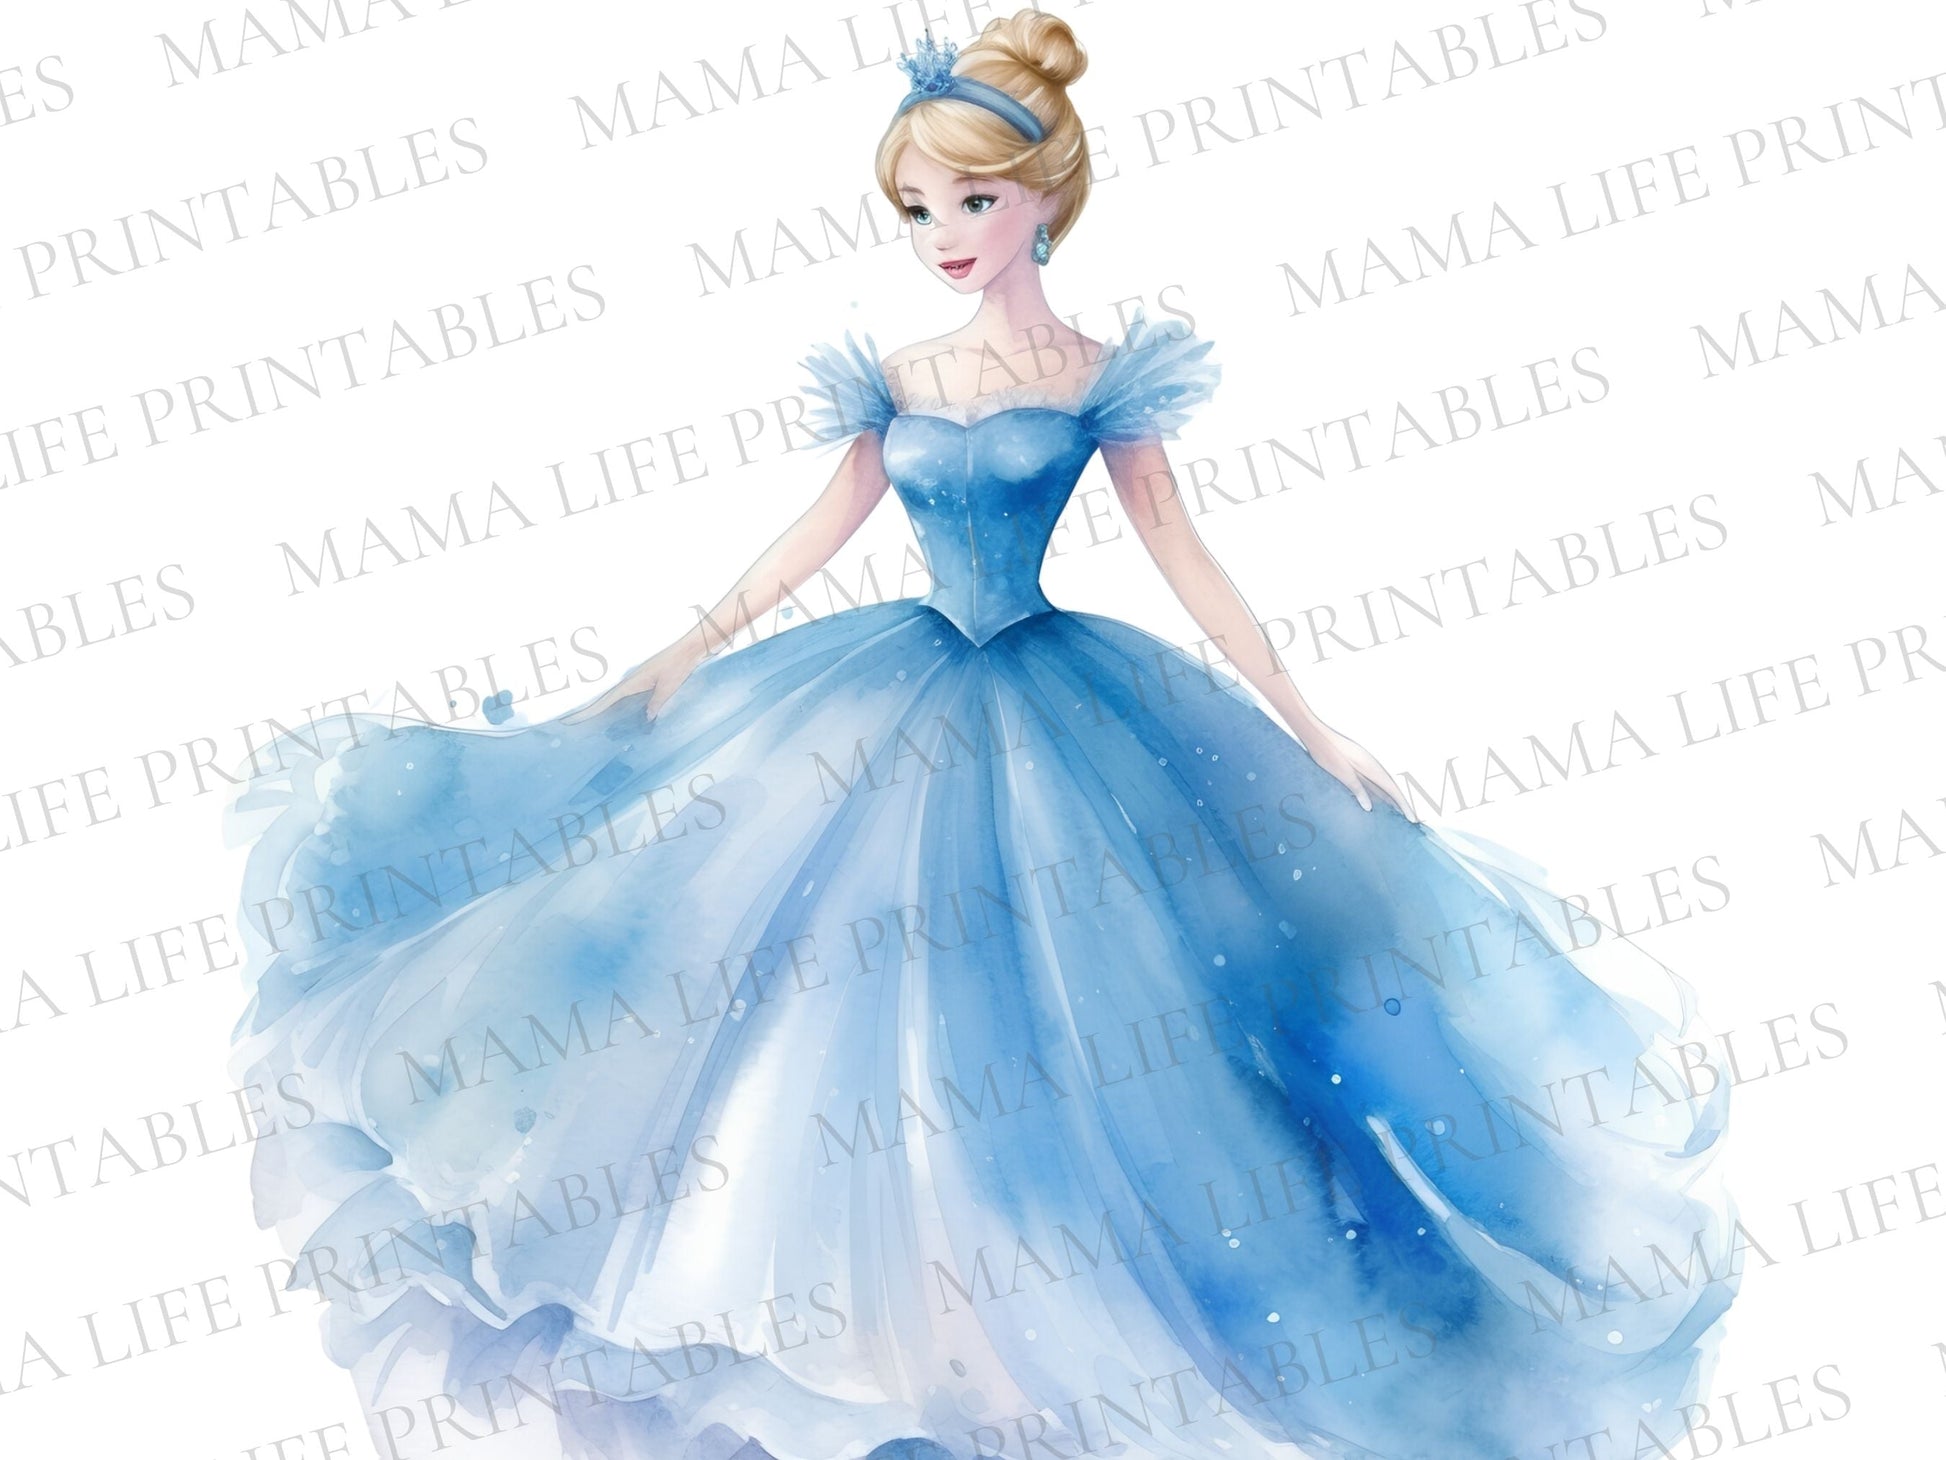 Disney Cinderella Watercolor PNG Cliparts - Digital Artwork - Mama Life Printables